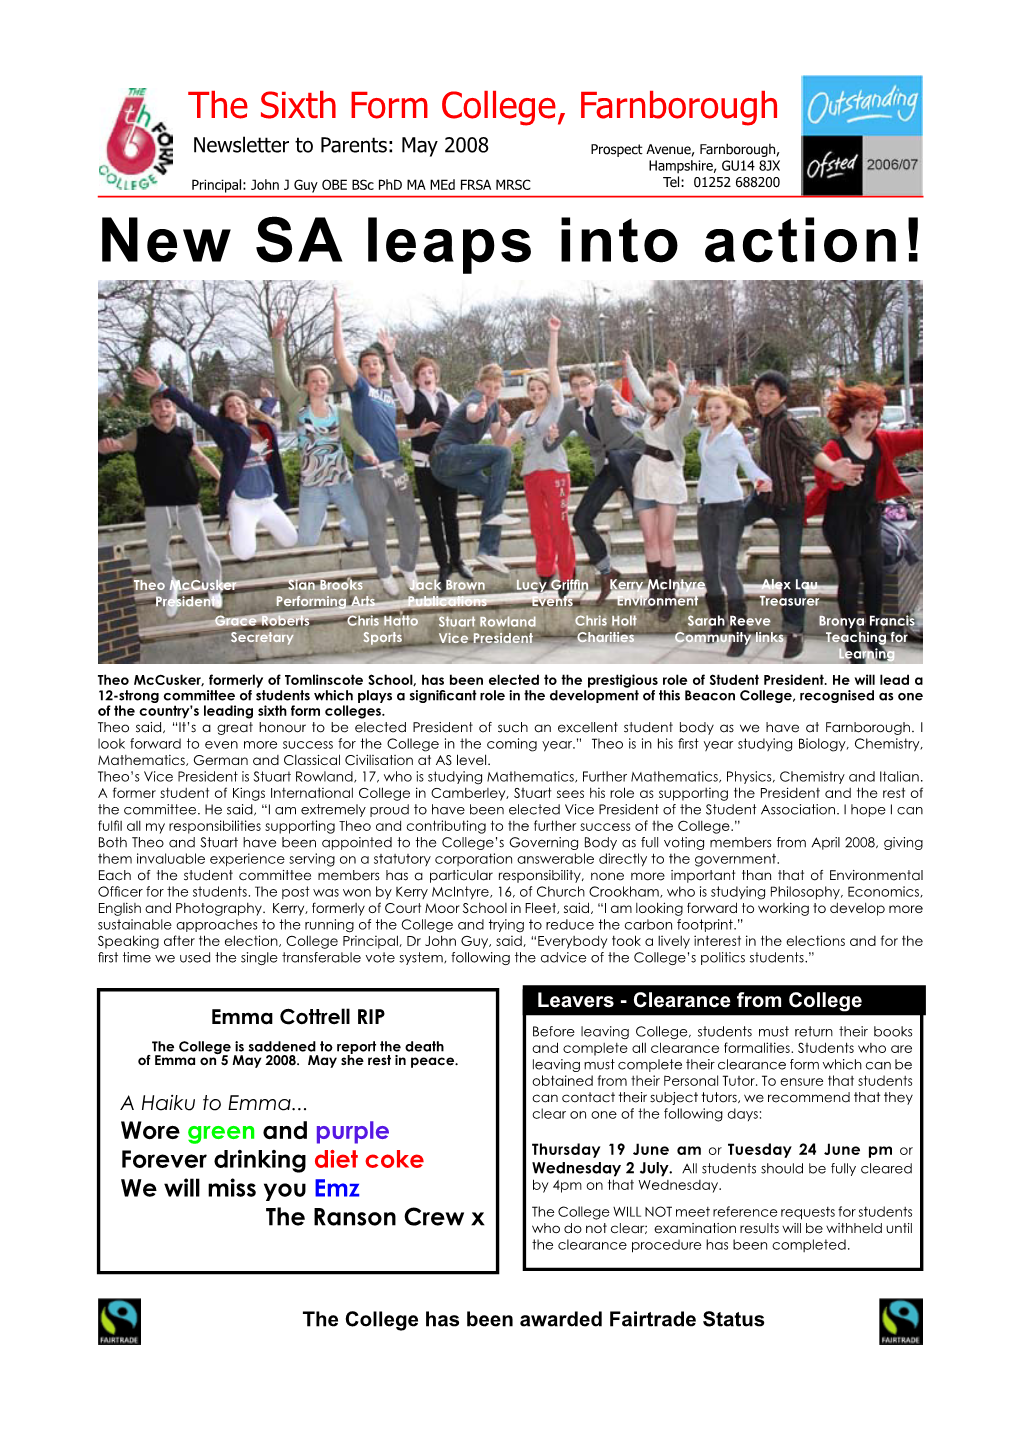 New SA Leaps Into Action!